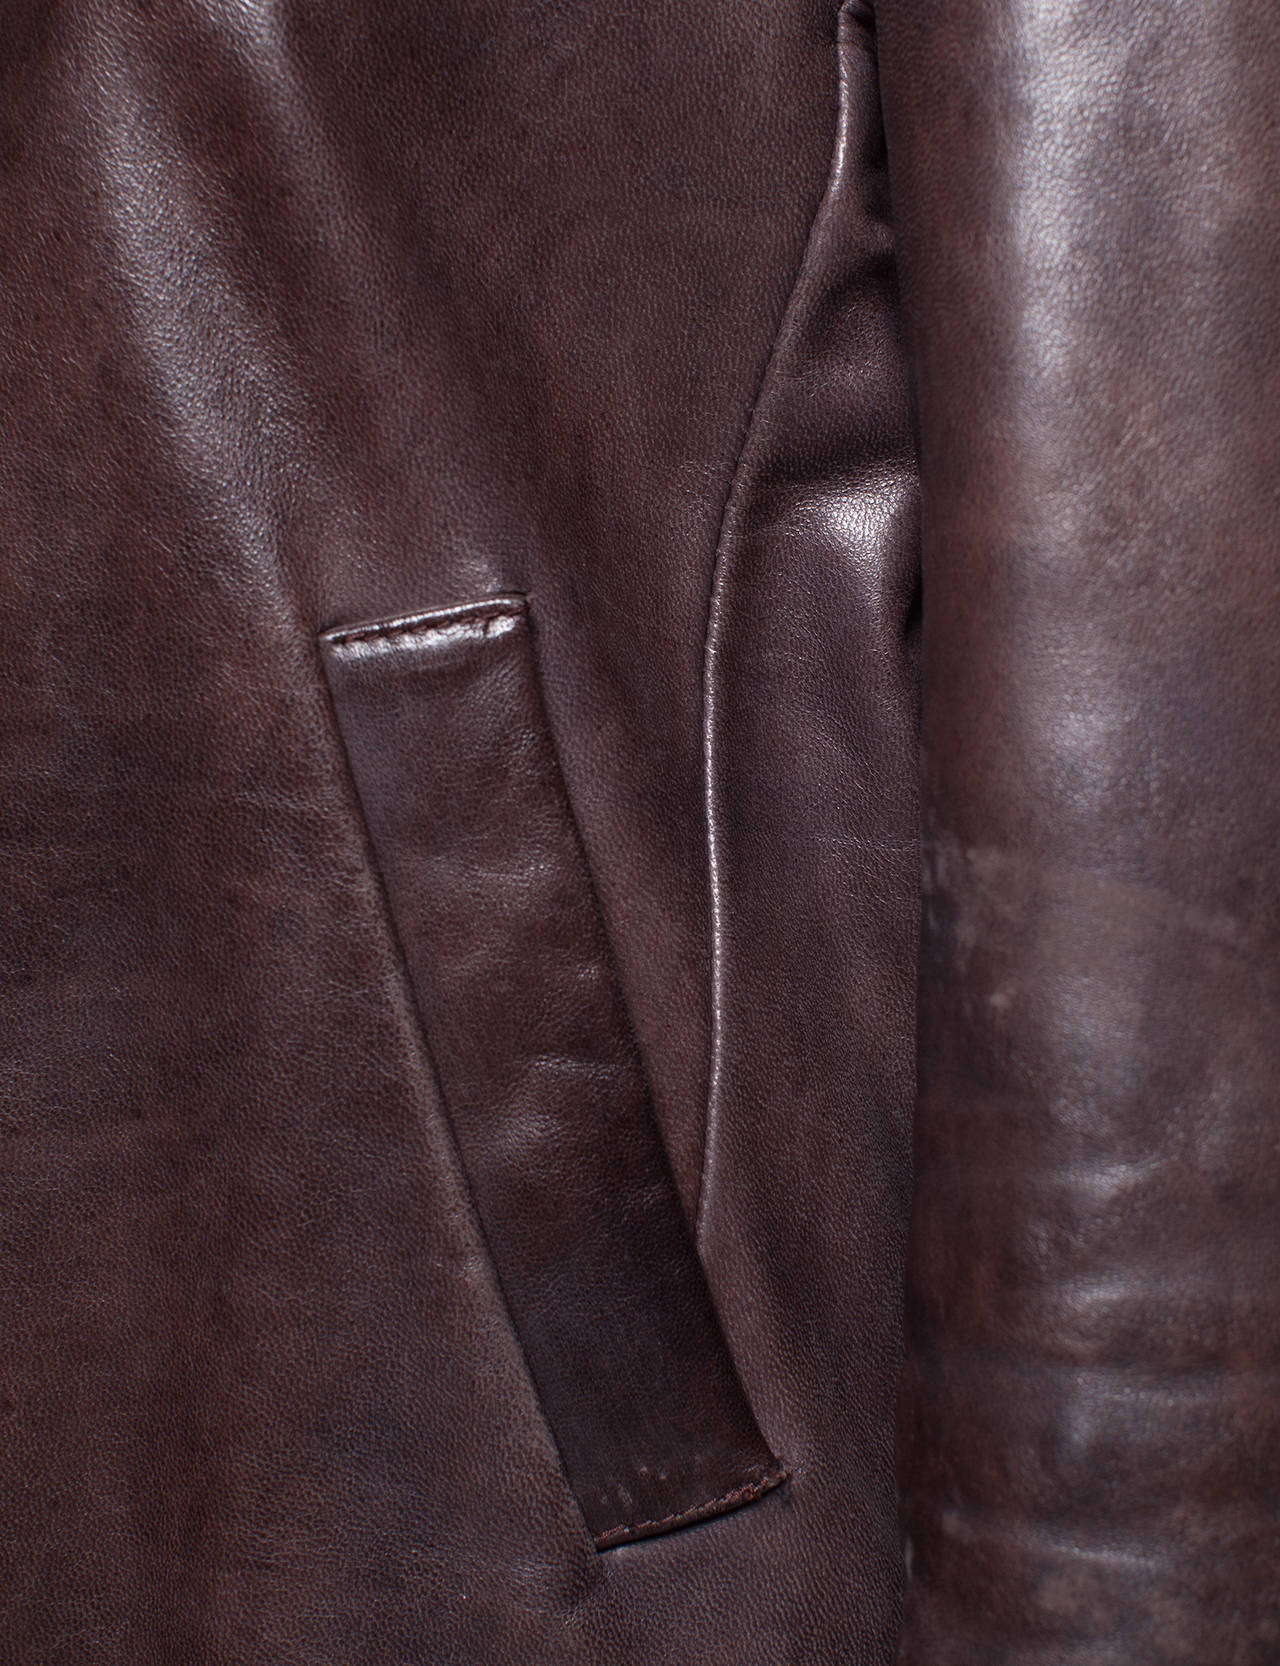 Women's Martin Margiela Vintage Blouson Leather Jacket FW'04, Sz. S For Sale